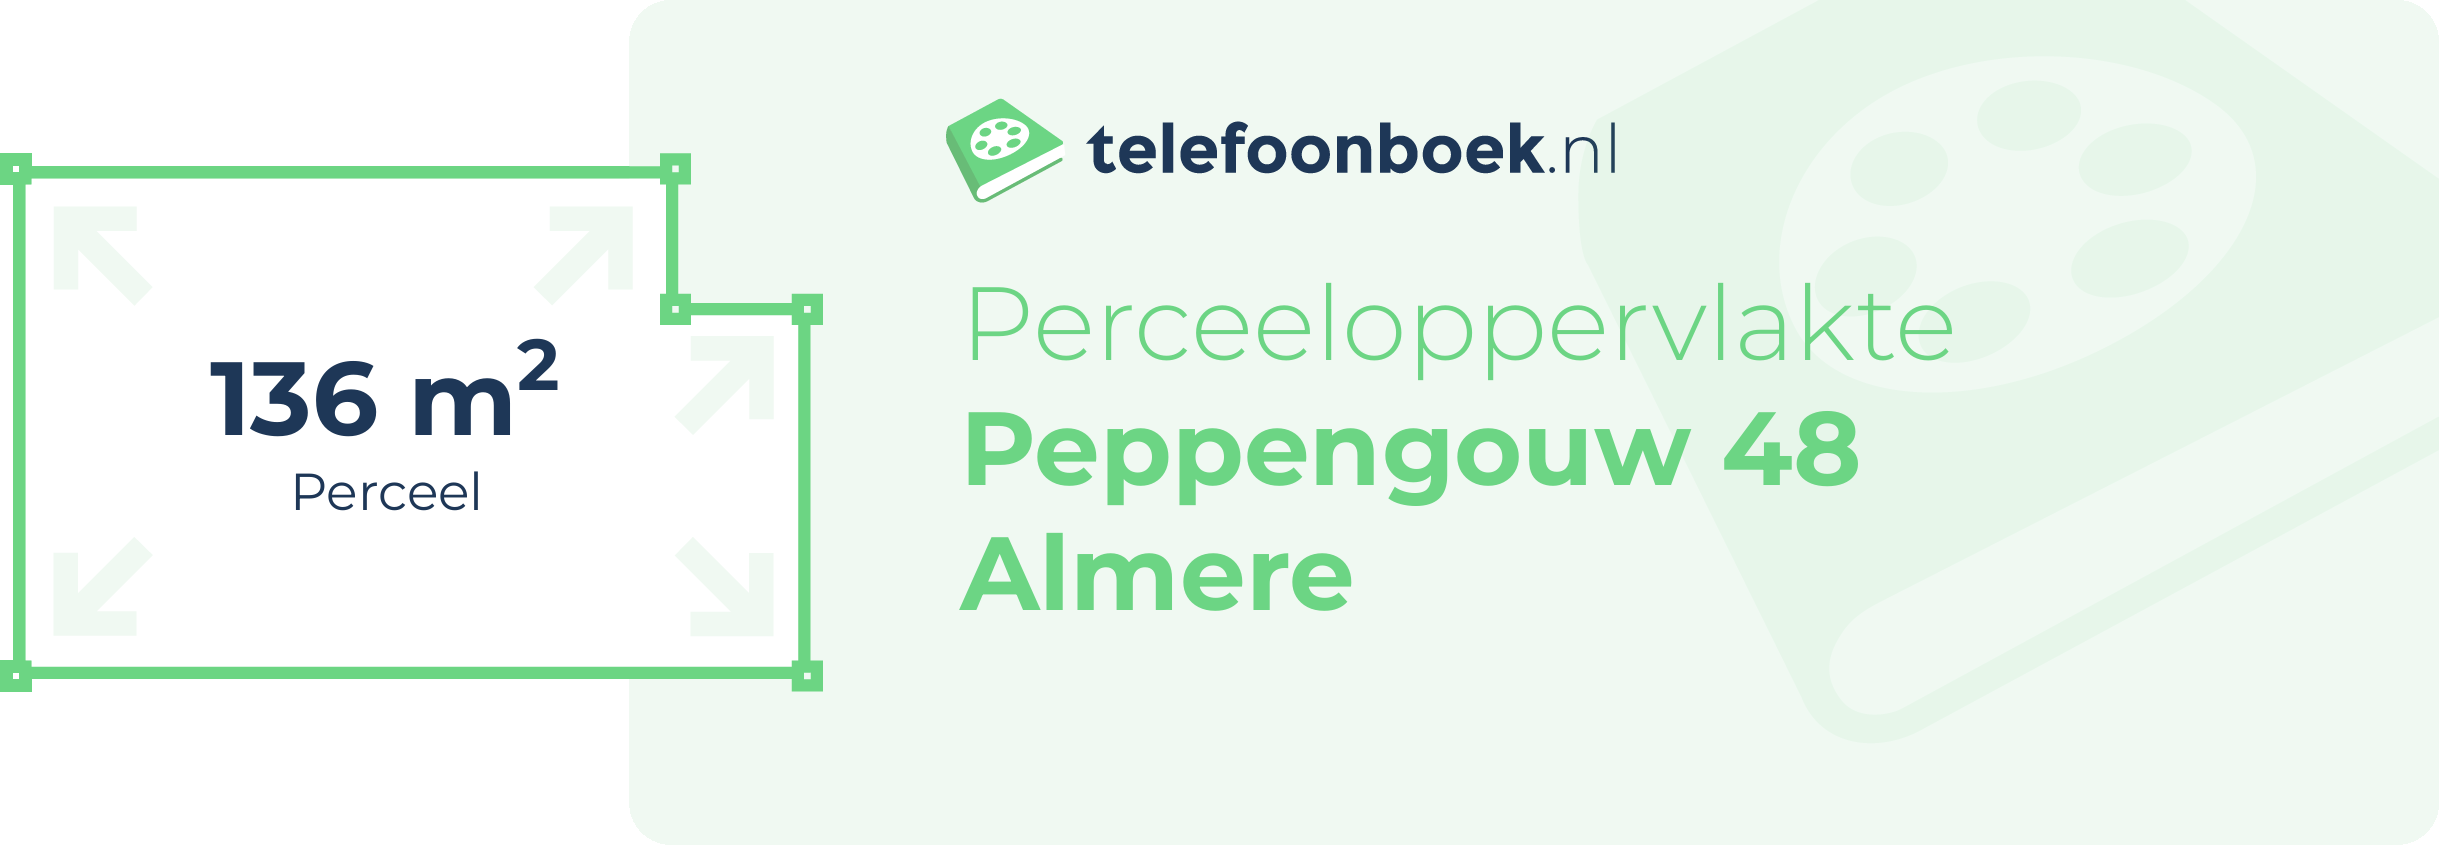 Perceeloppervlakte Peppengouw 48 Almere